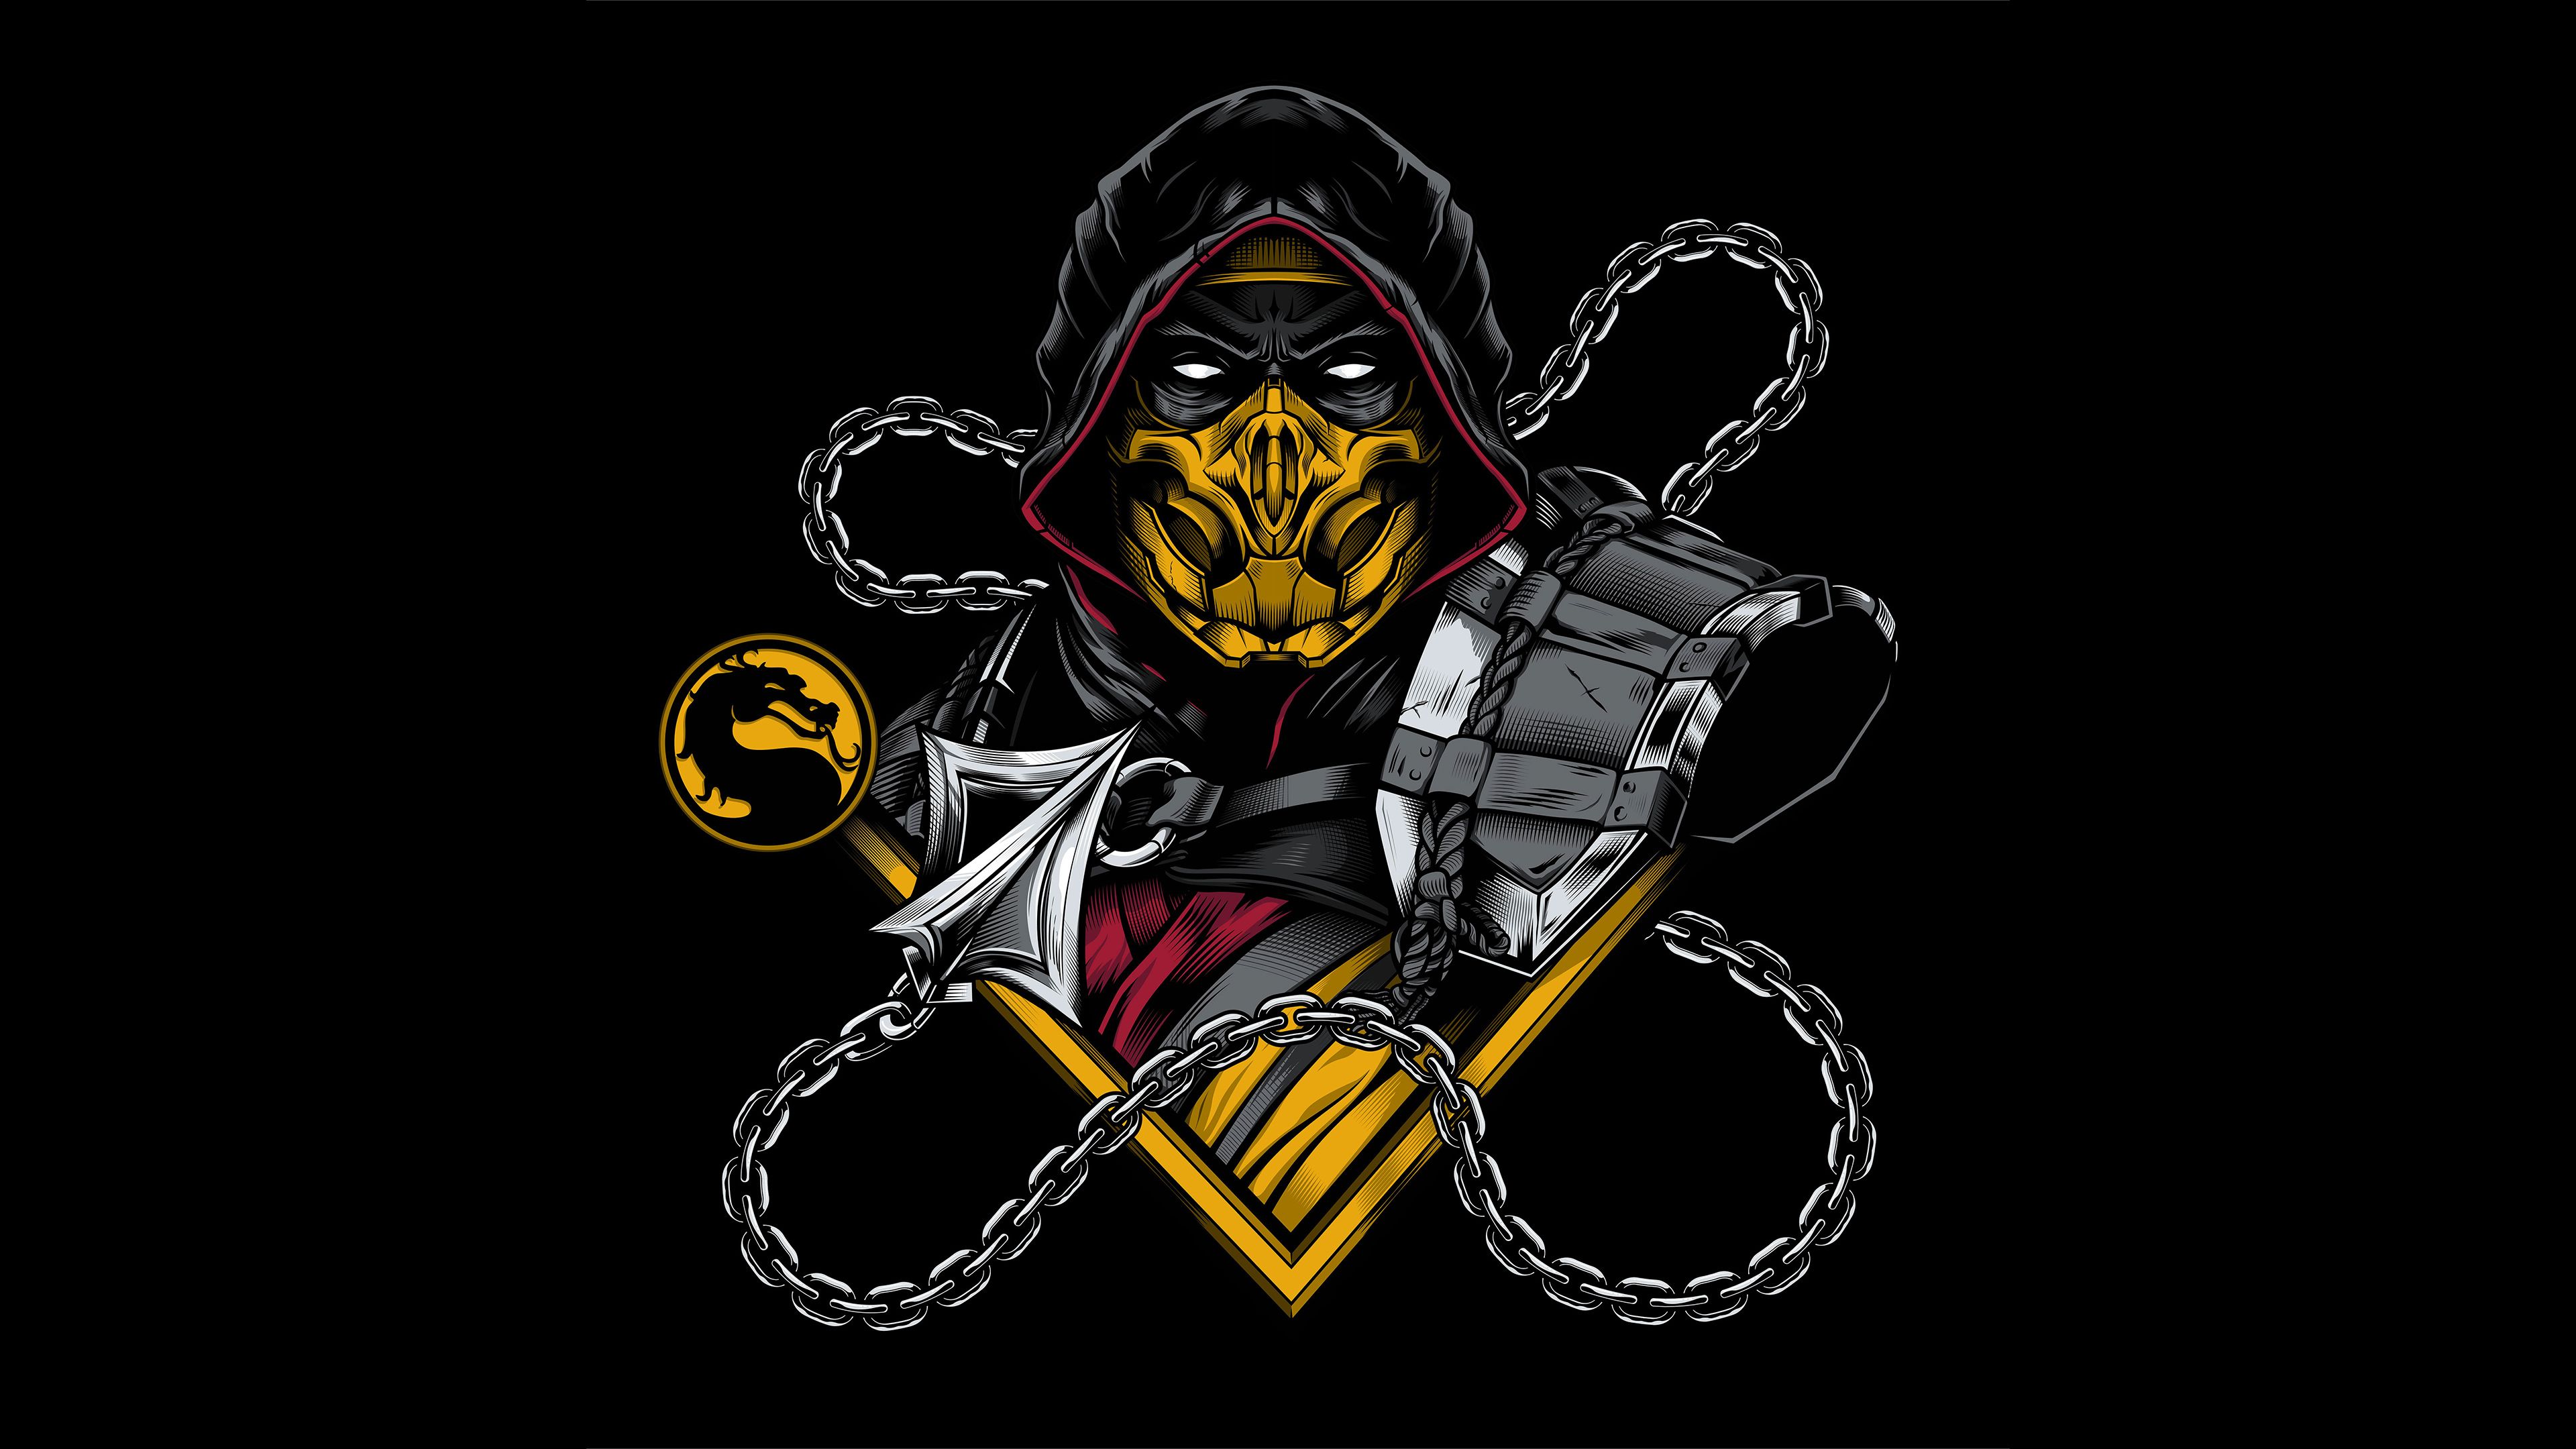 Scorpion Sub Zero Mortal Kombat Minimal, HD Games, 4k Wallpaper, Image, Background, Photo and Picture